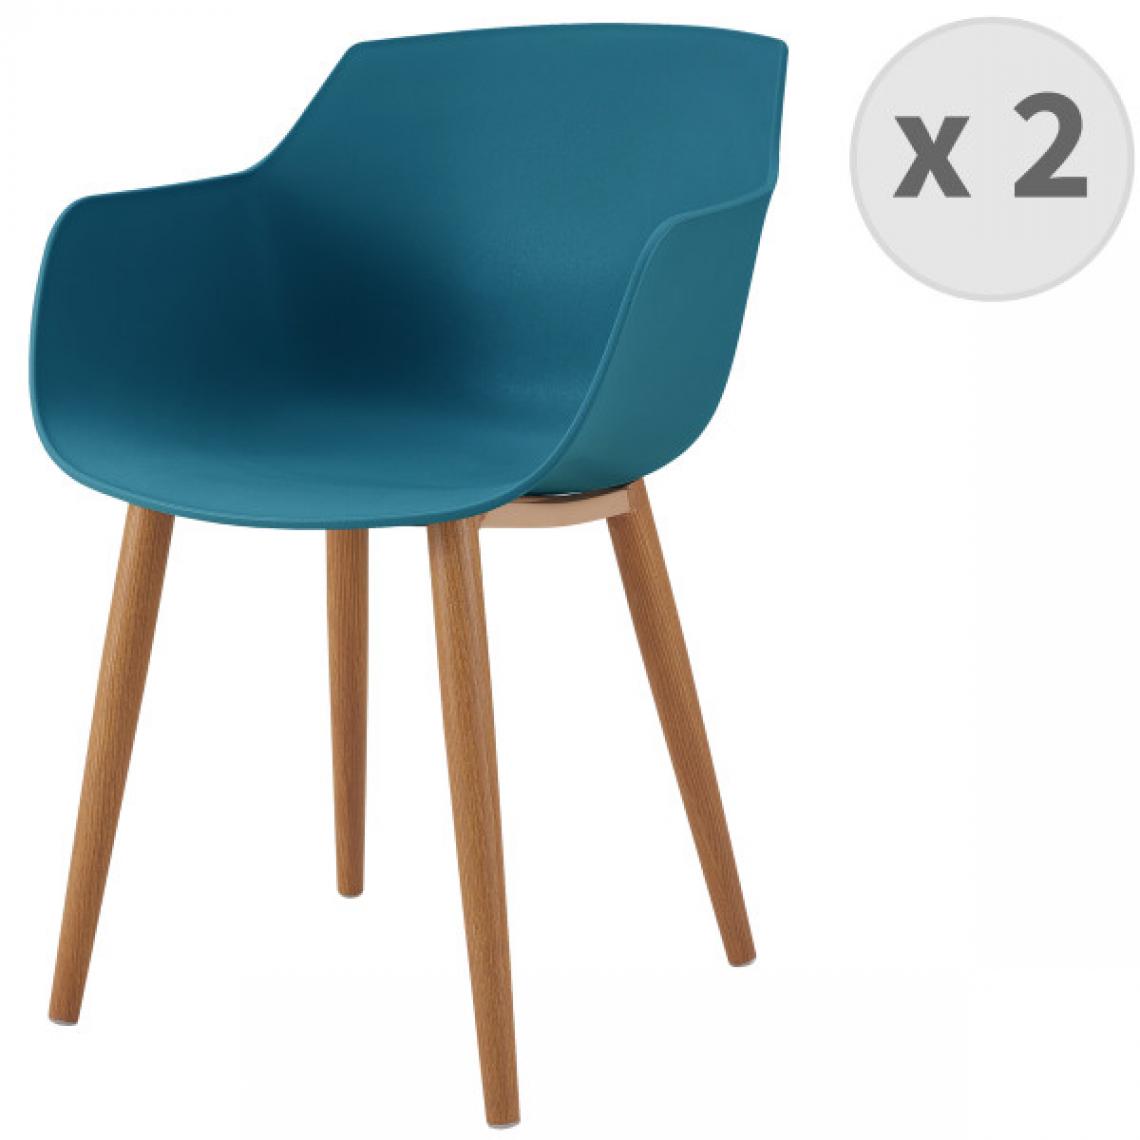 Moloo - ANDREA-Chaise scandinave bleu canard pied métal effet bois (x2) - Chaises